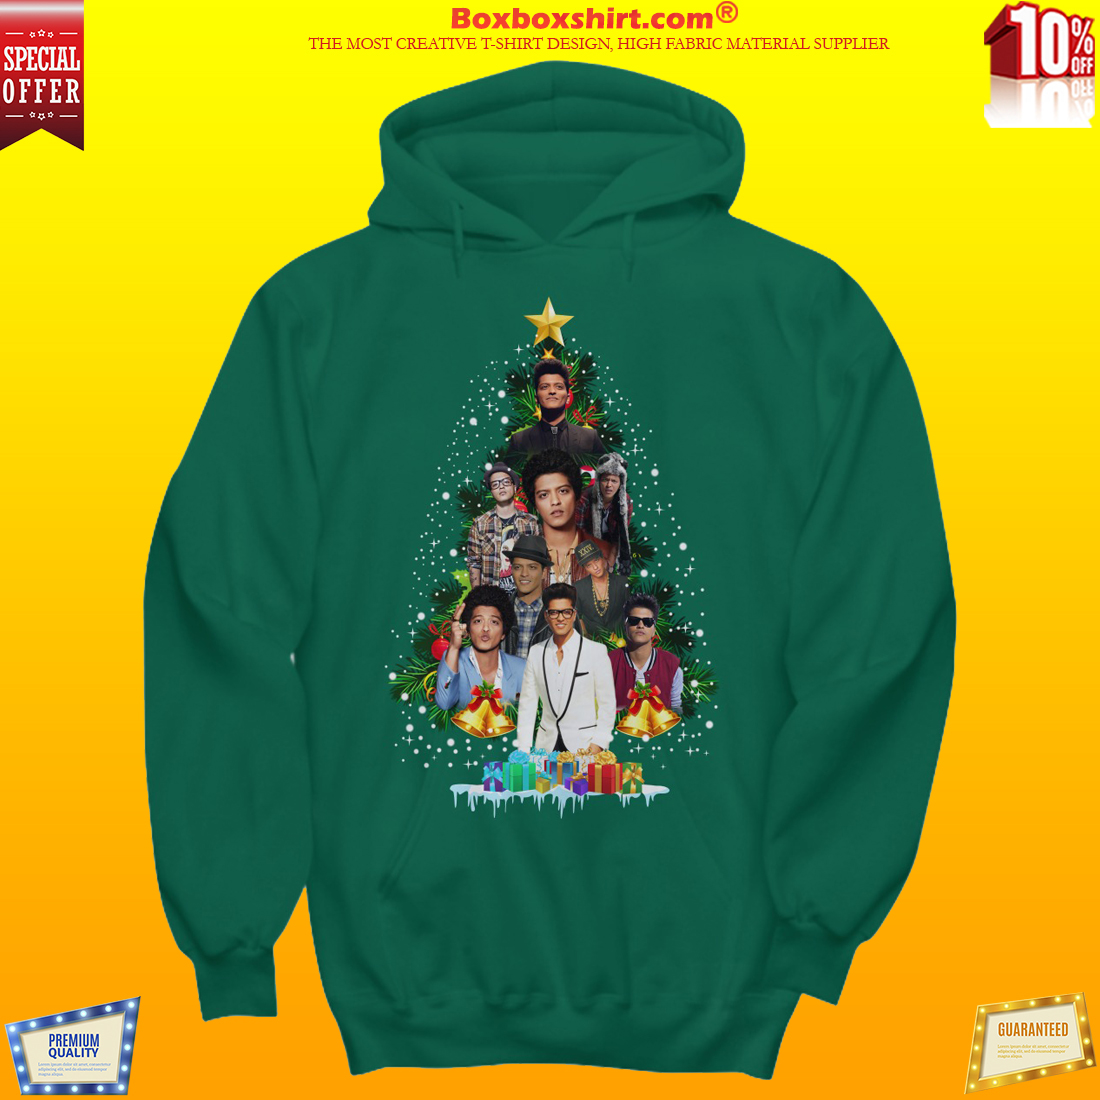 Bruno Mars Christmas tree sweatshirt and hoodies